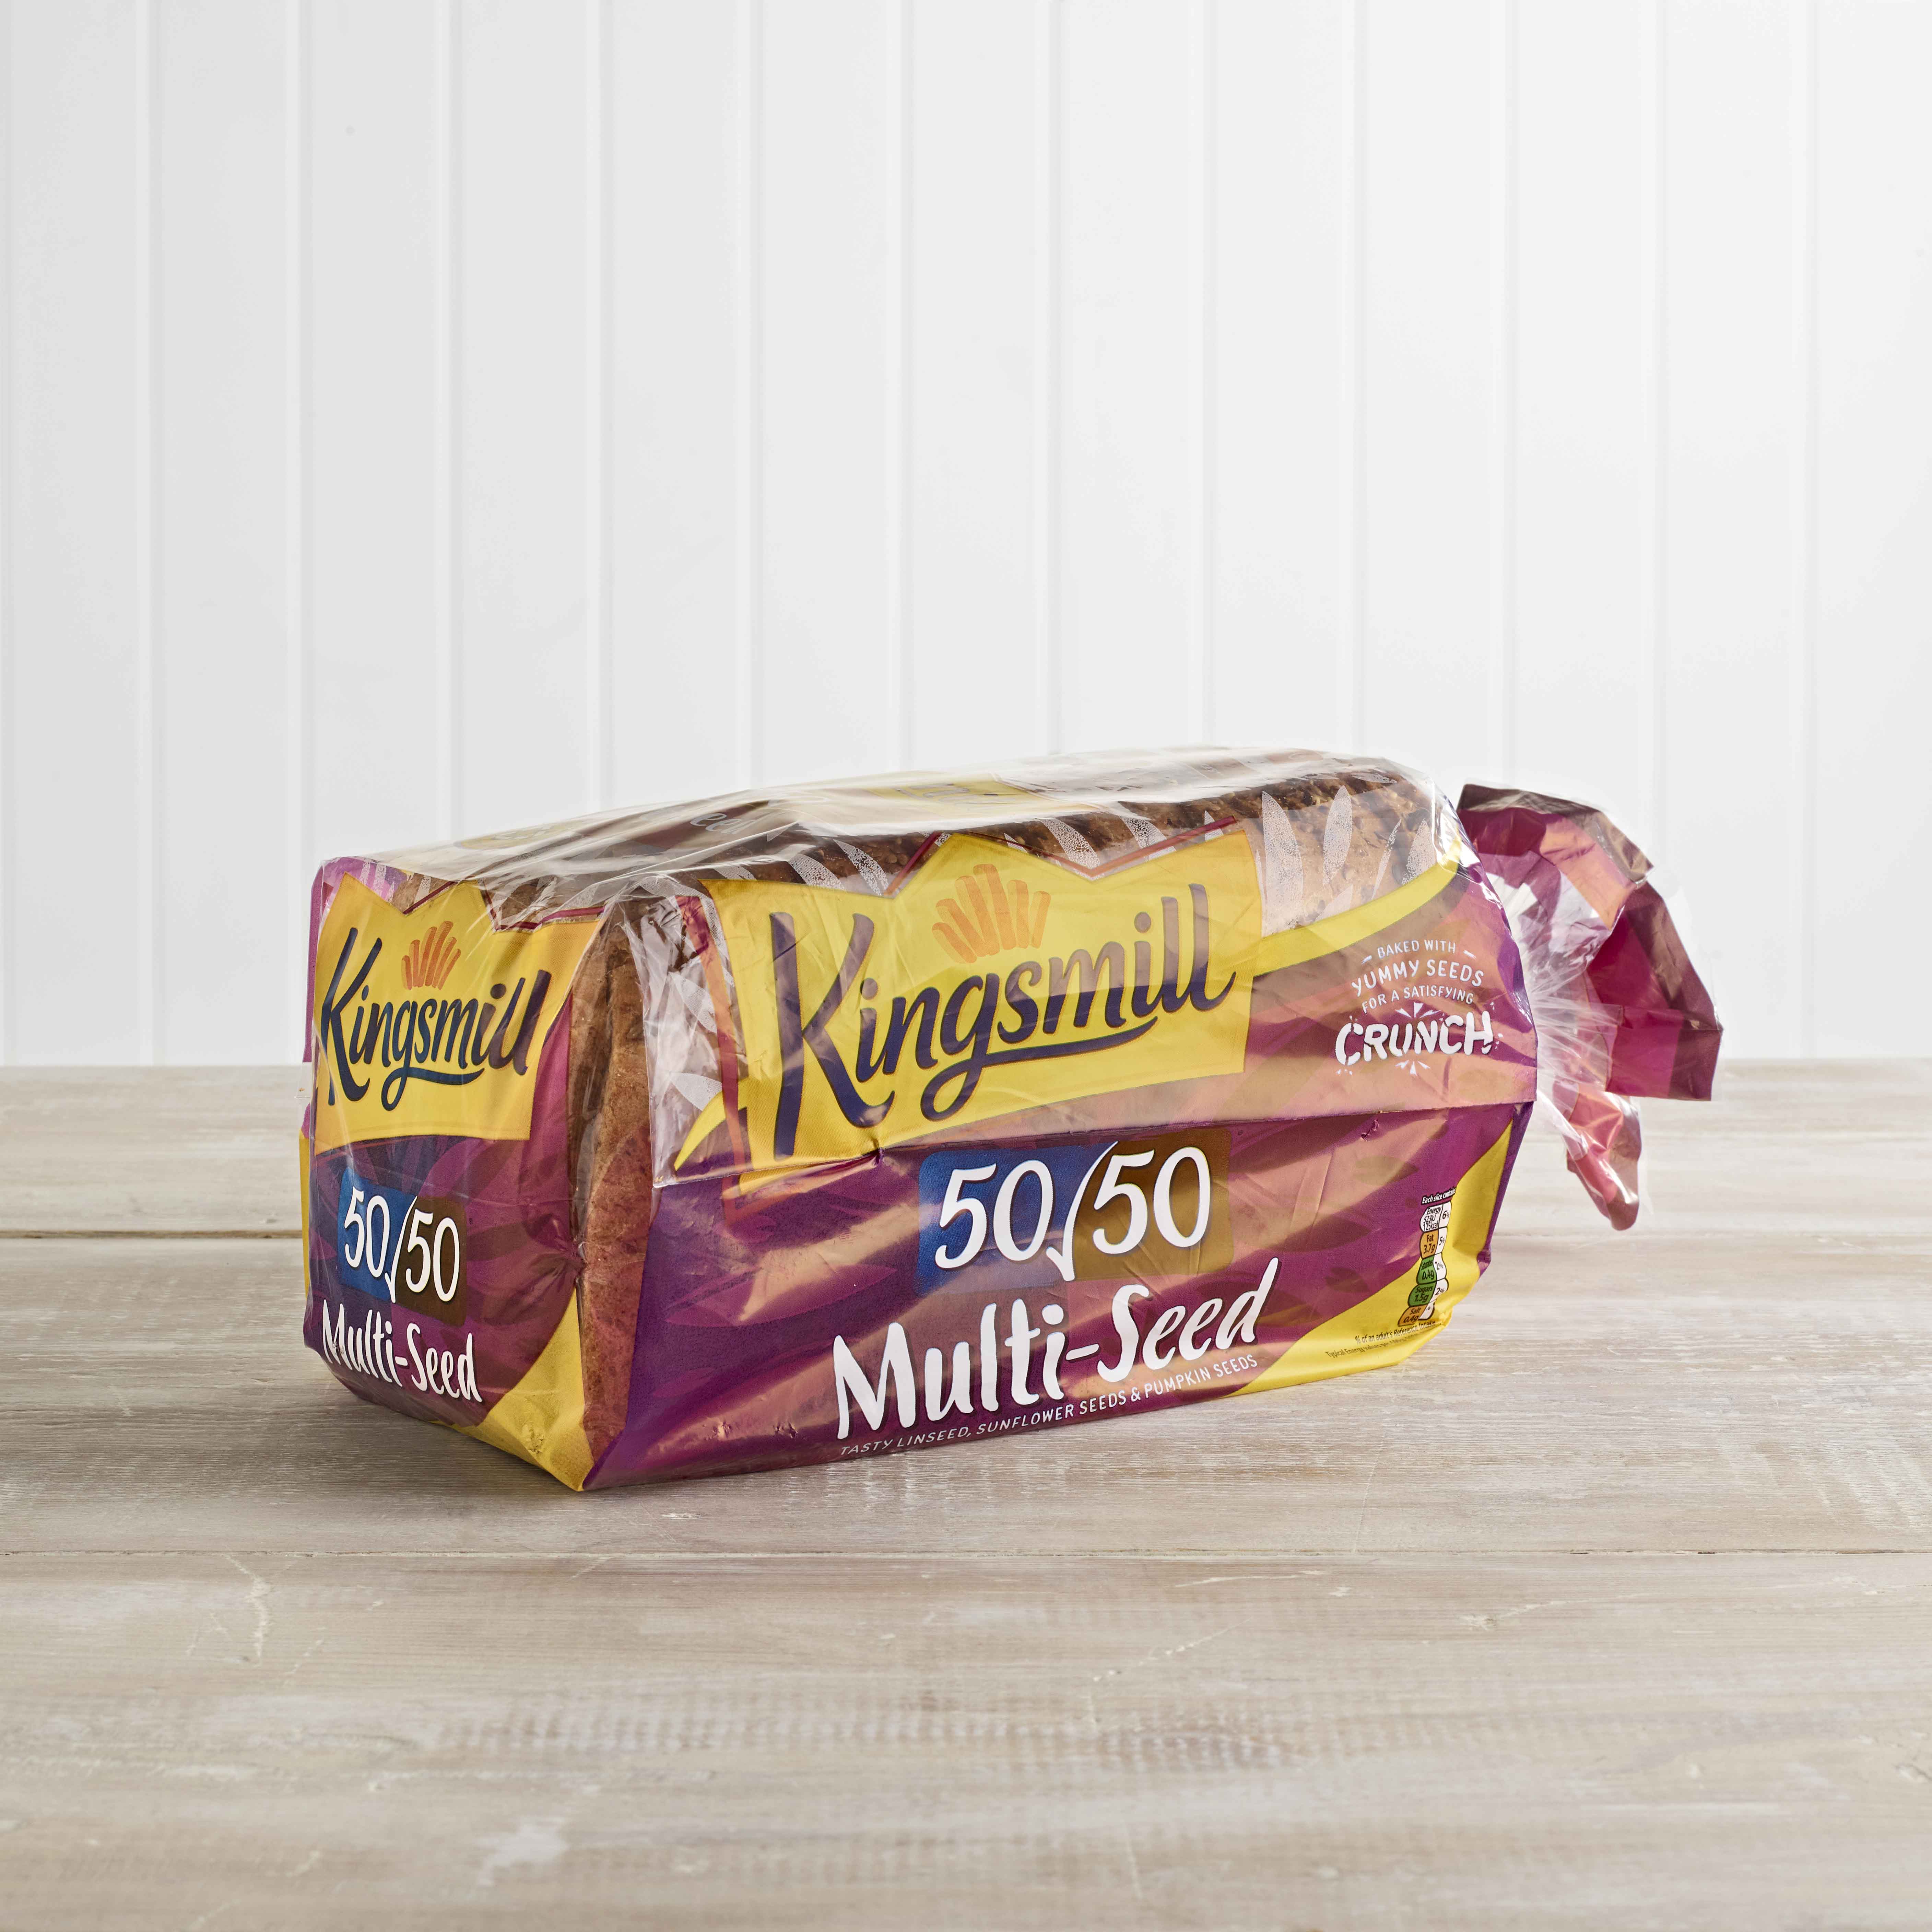 Kingsmill 5050 Multi-Seed Bread, 750g